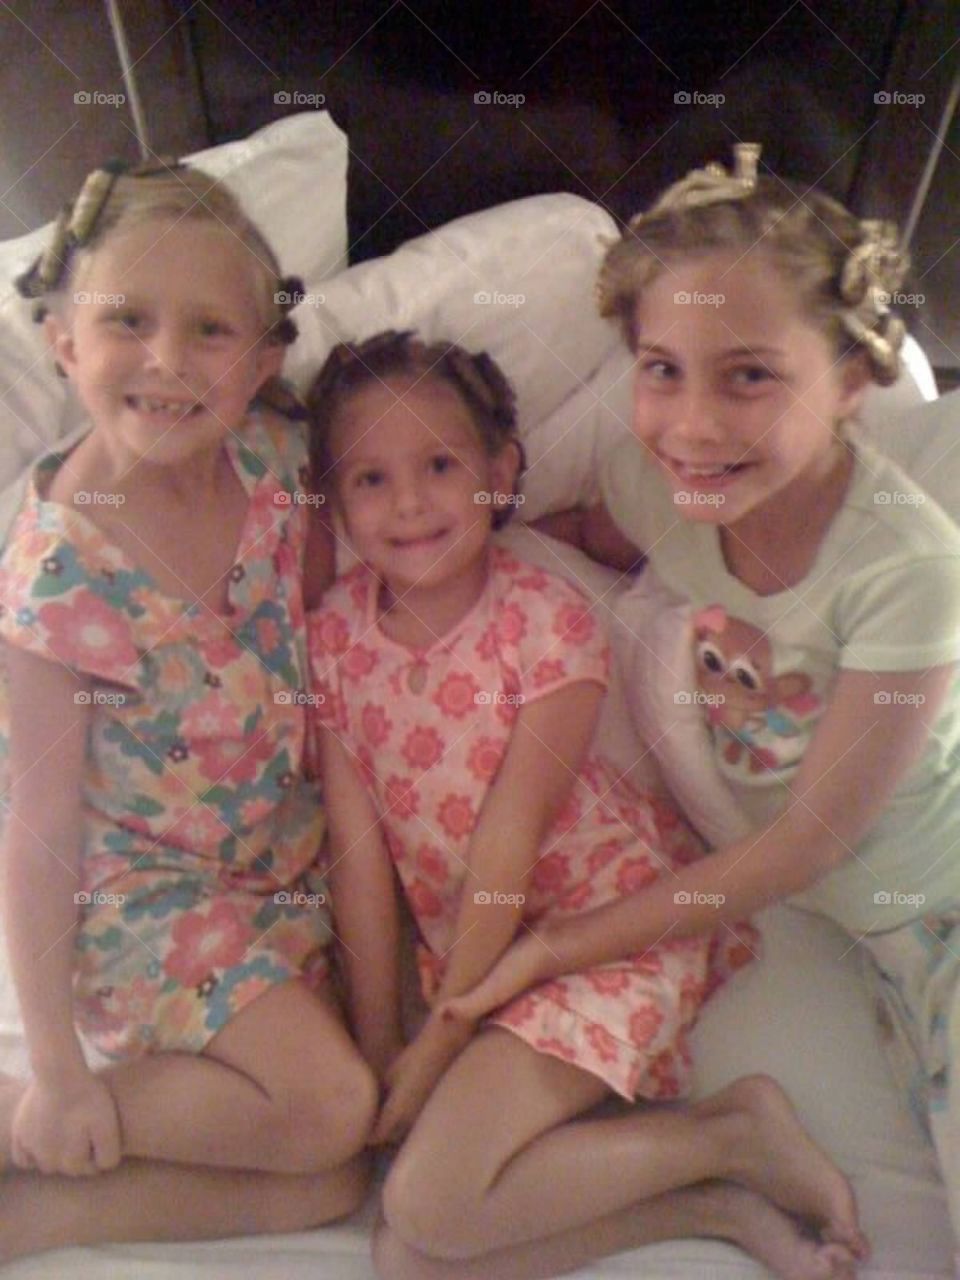 Little girls in hair rollers
